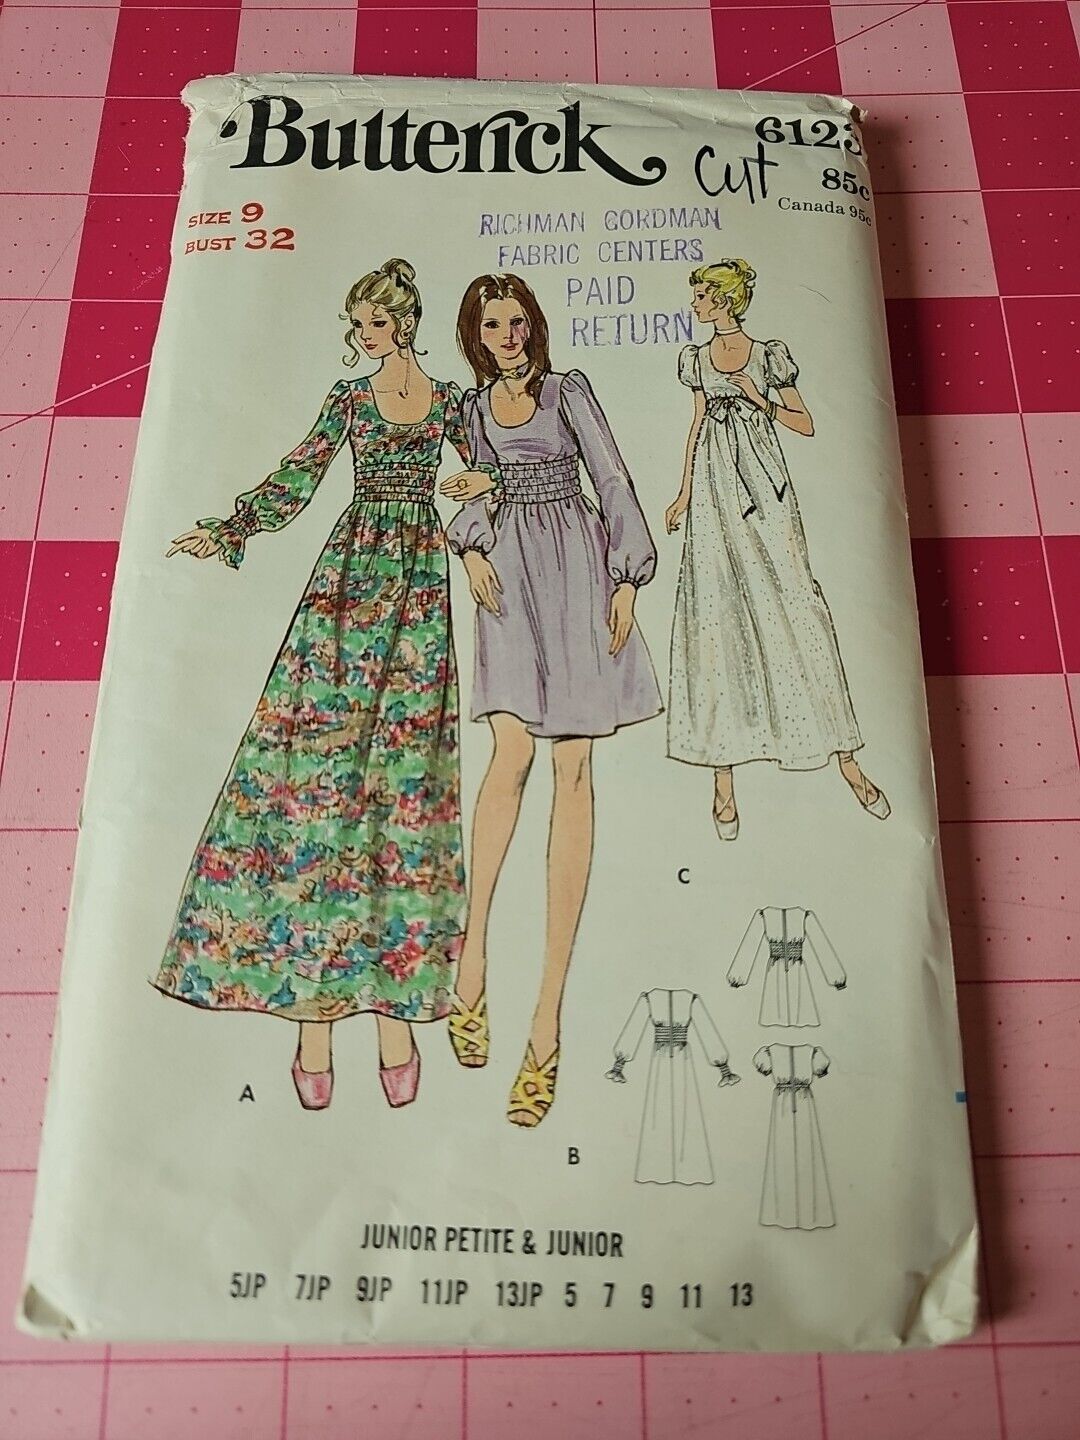 Vintage Butterick Pattern 6123 Hippie Boho Maxi Dress Elastic Waist Size 9 CUT